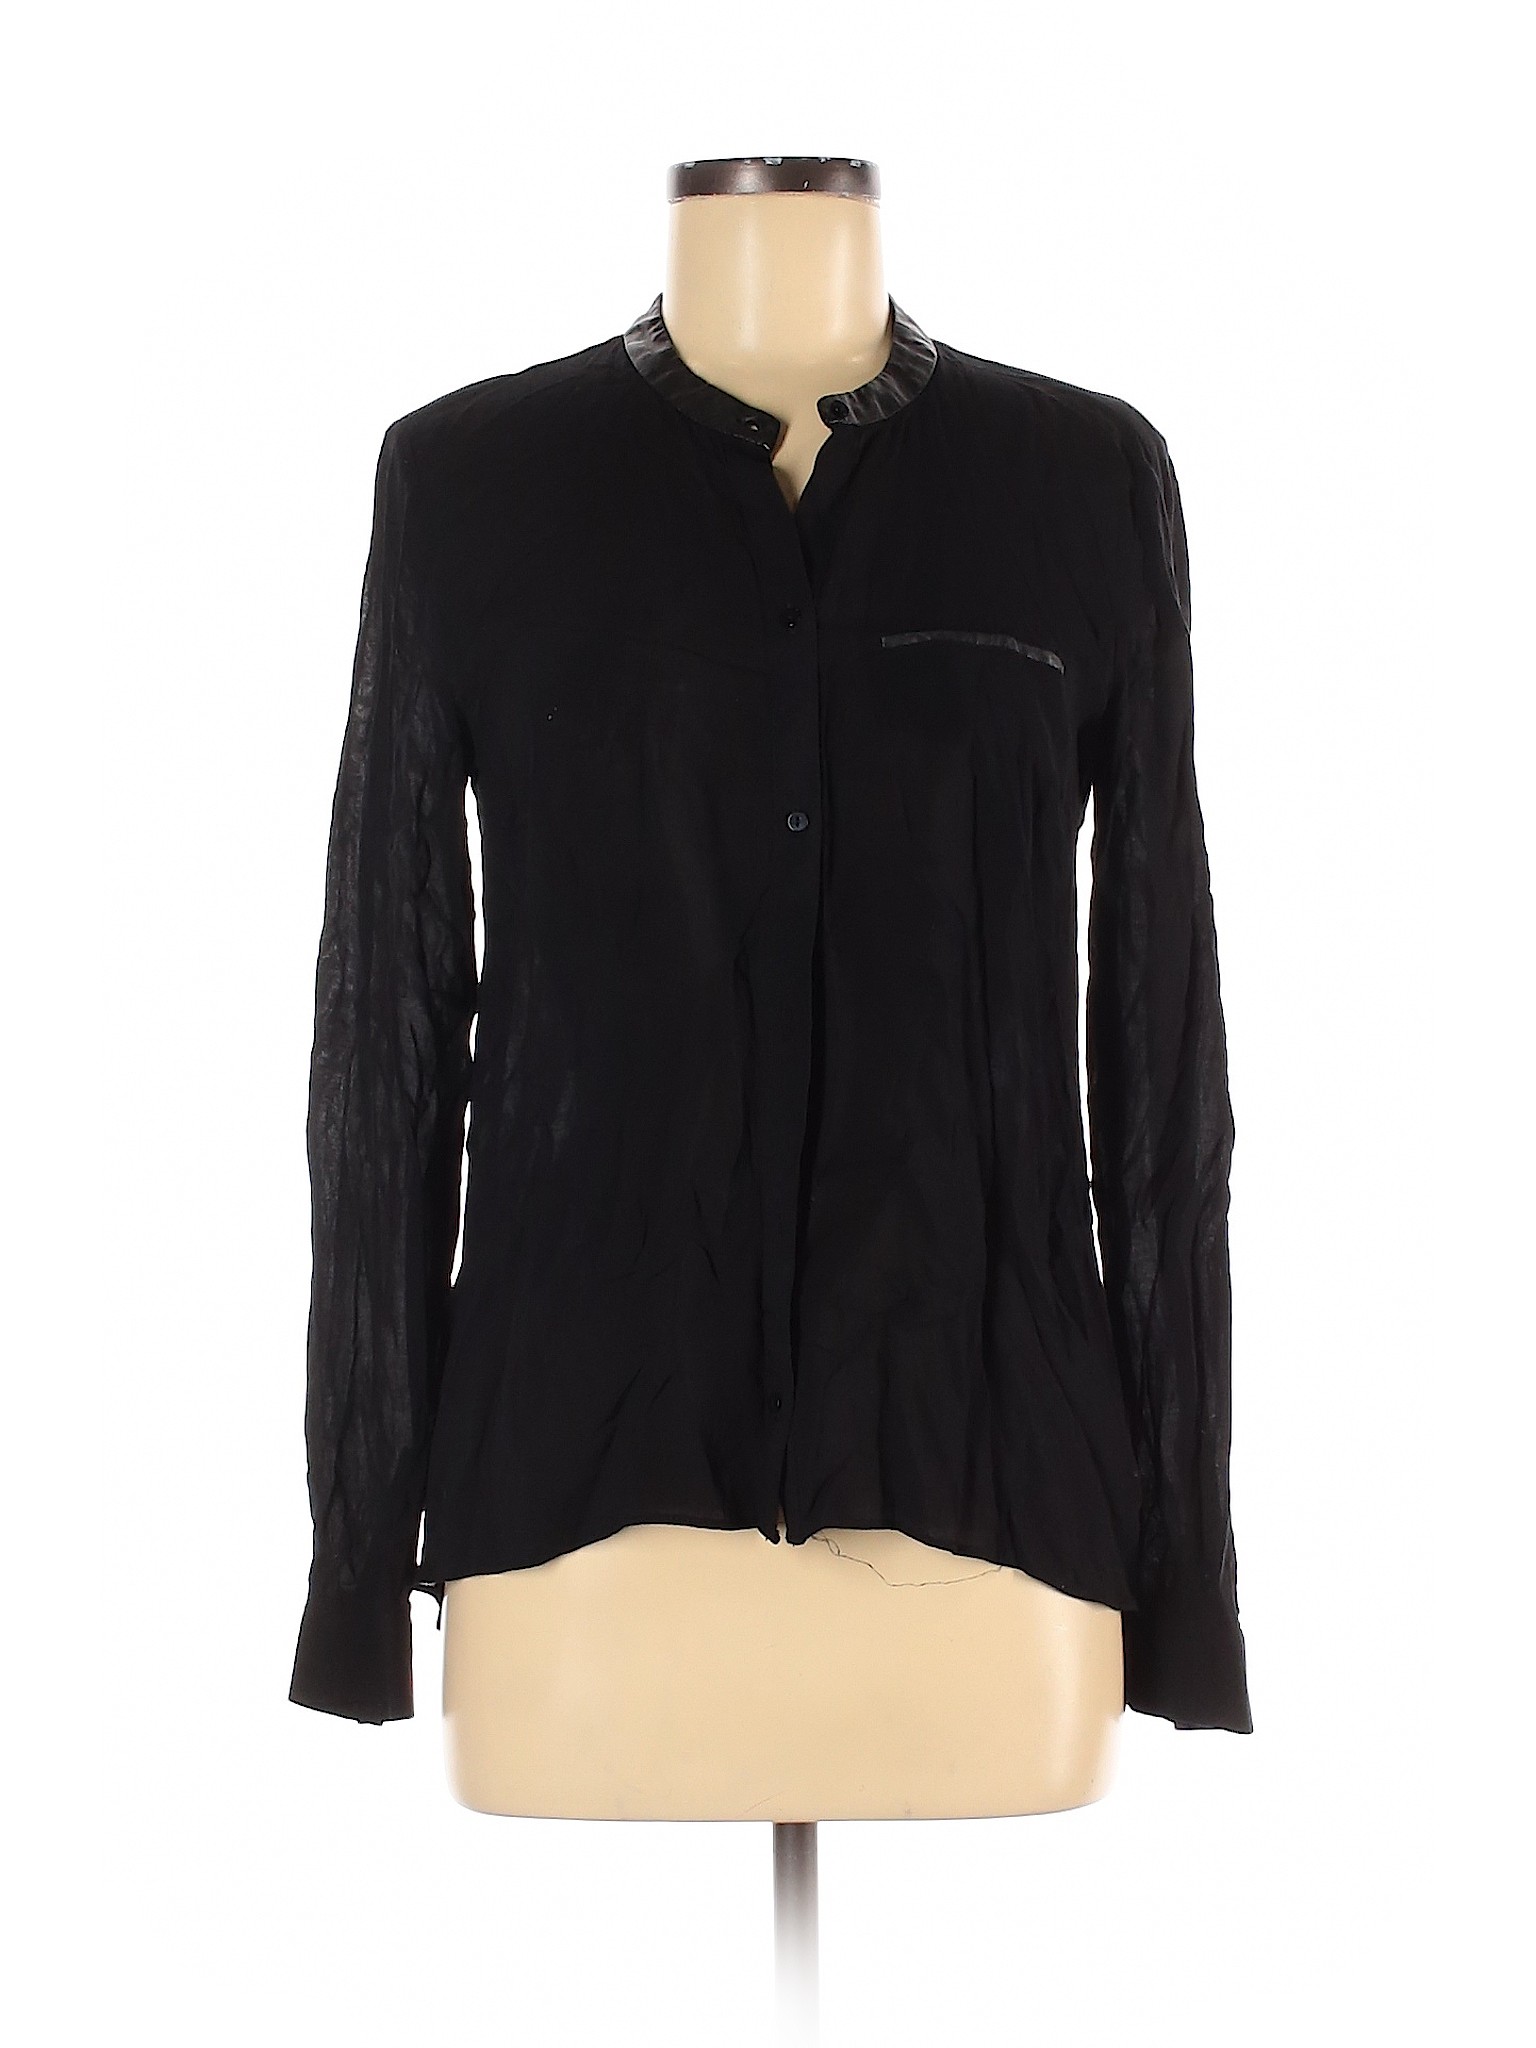 Philosophy Republic Clothing Women Black Long Sleeve Blouse S | eBay